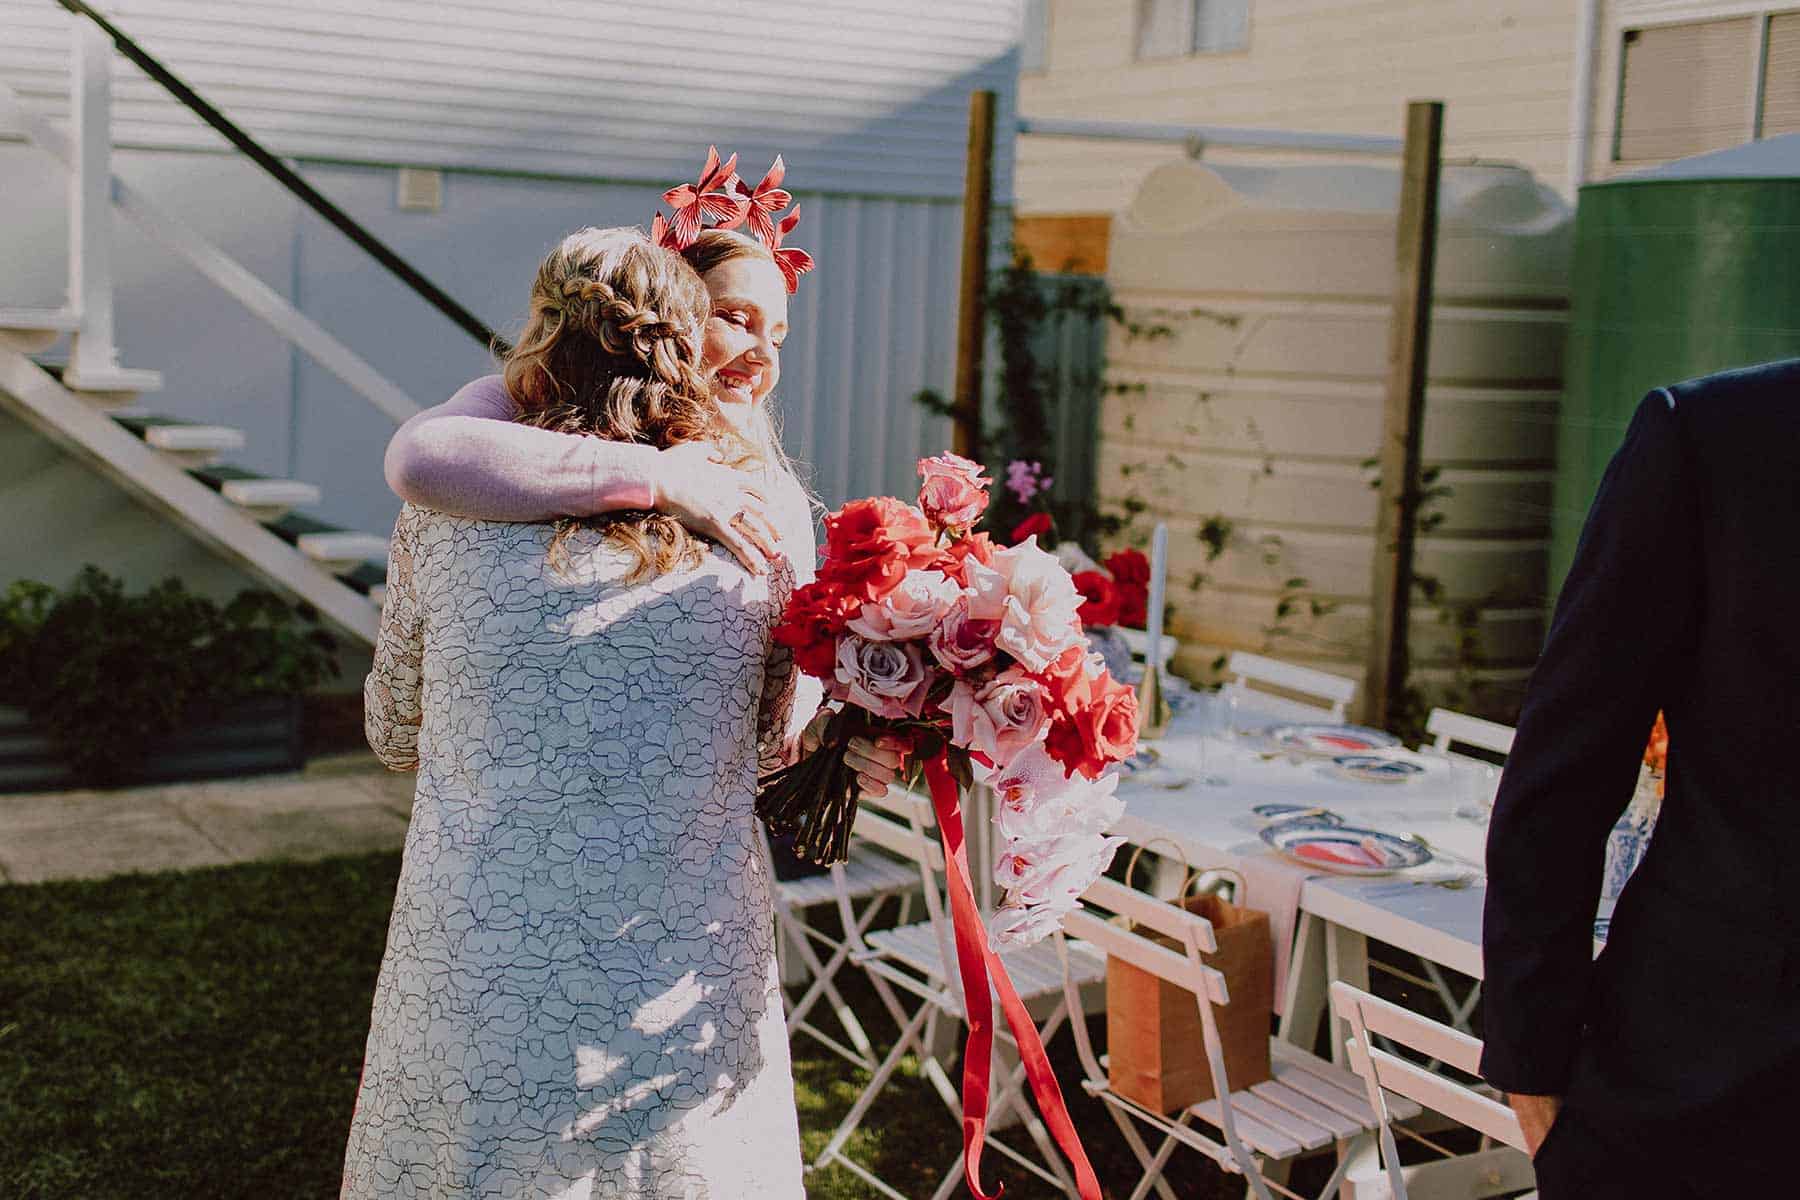 Modern and colourful backyard wedding in Brisbane